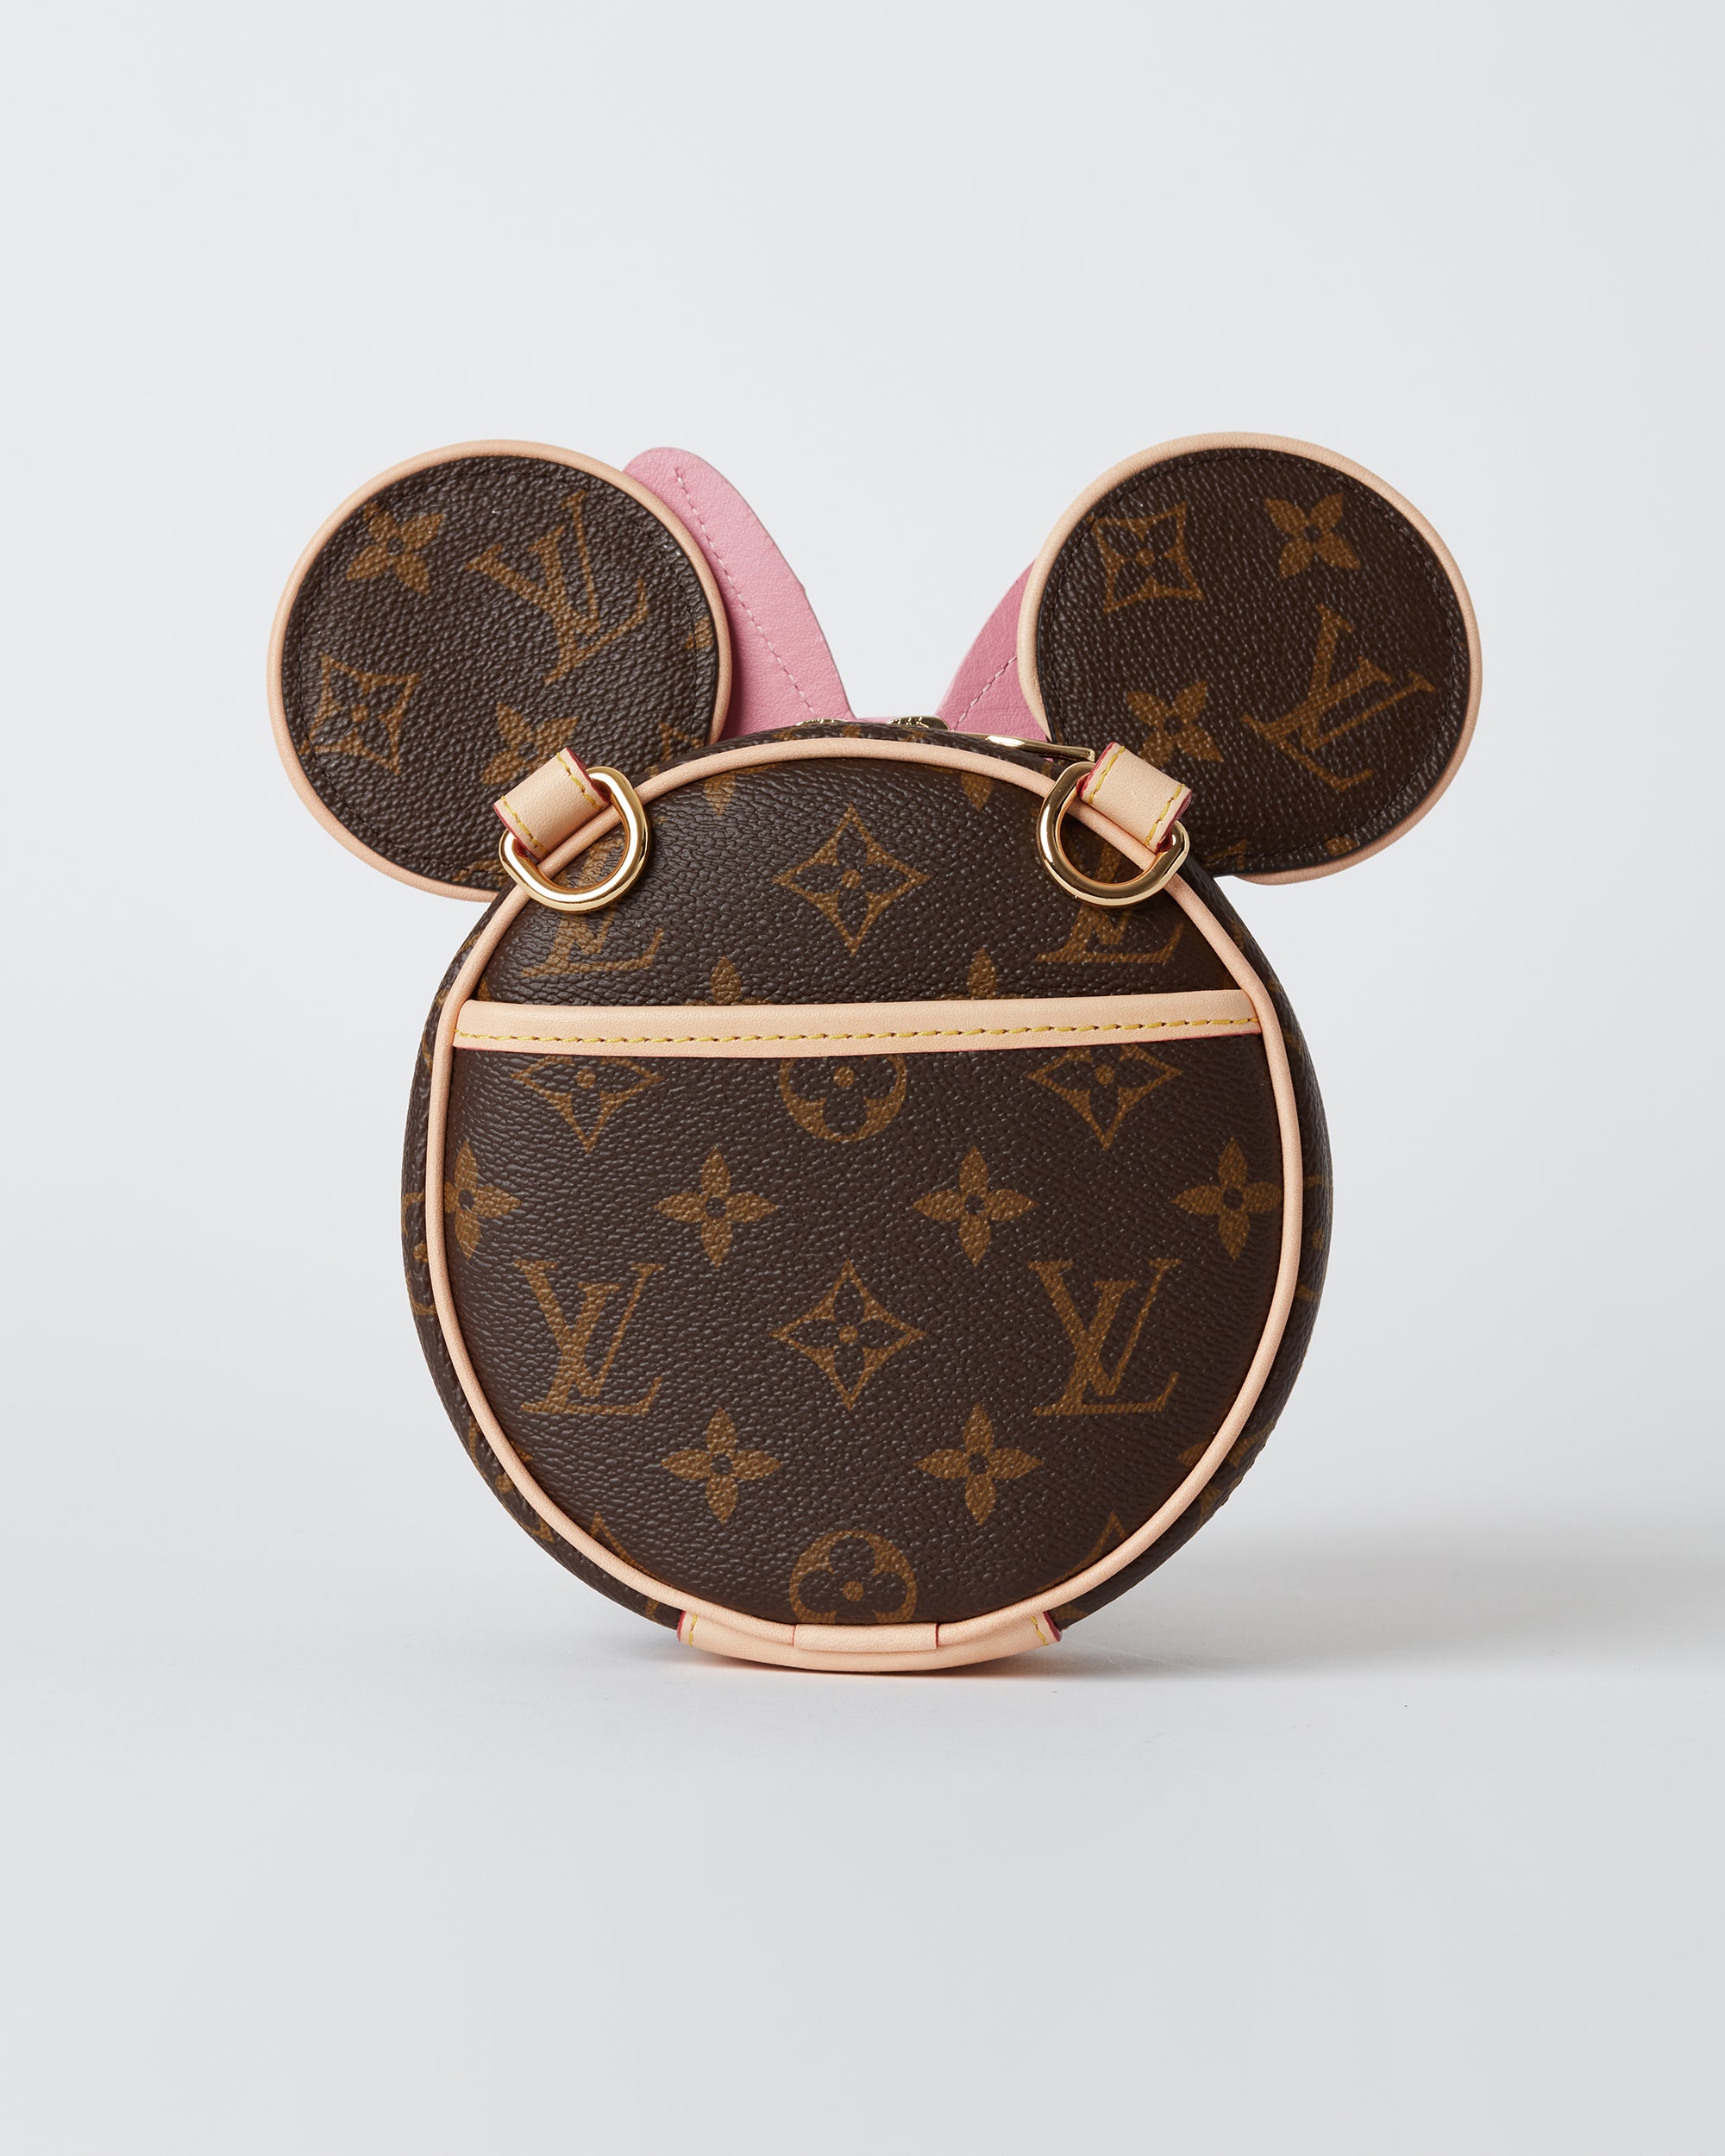 Louis Vuitton Authentic Sheron Barber Louis Vuitton Mickey Mouse Strap Bag